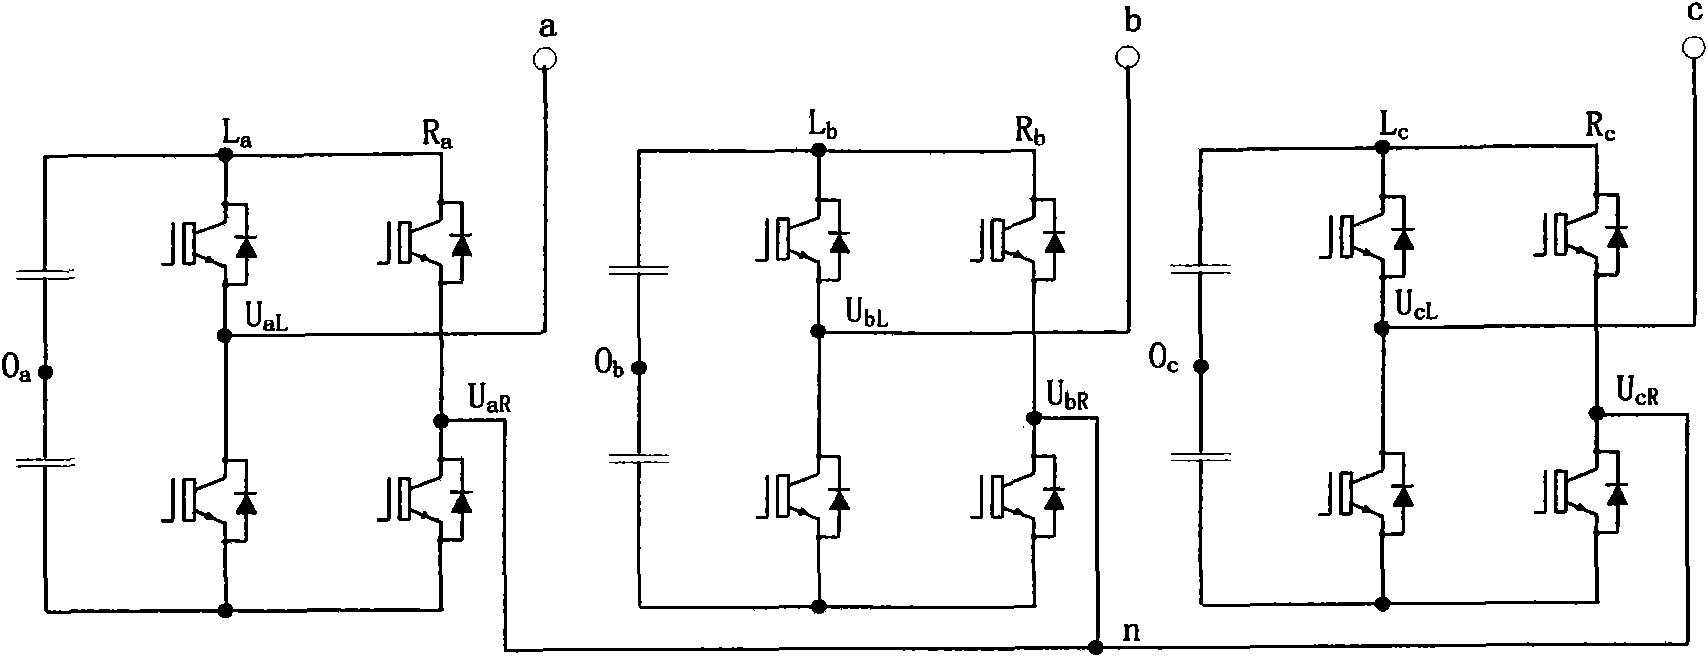 Modulation method applied to cascade converter